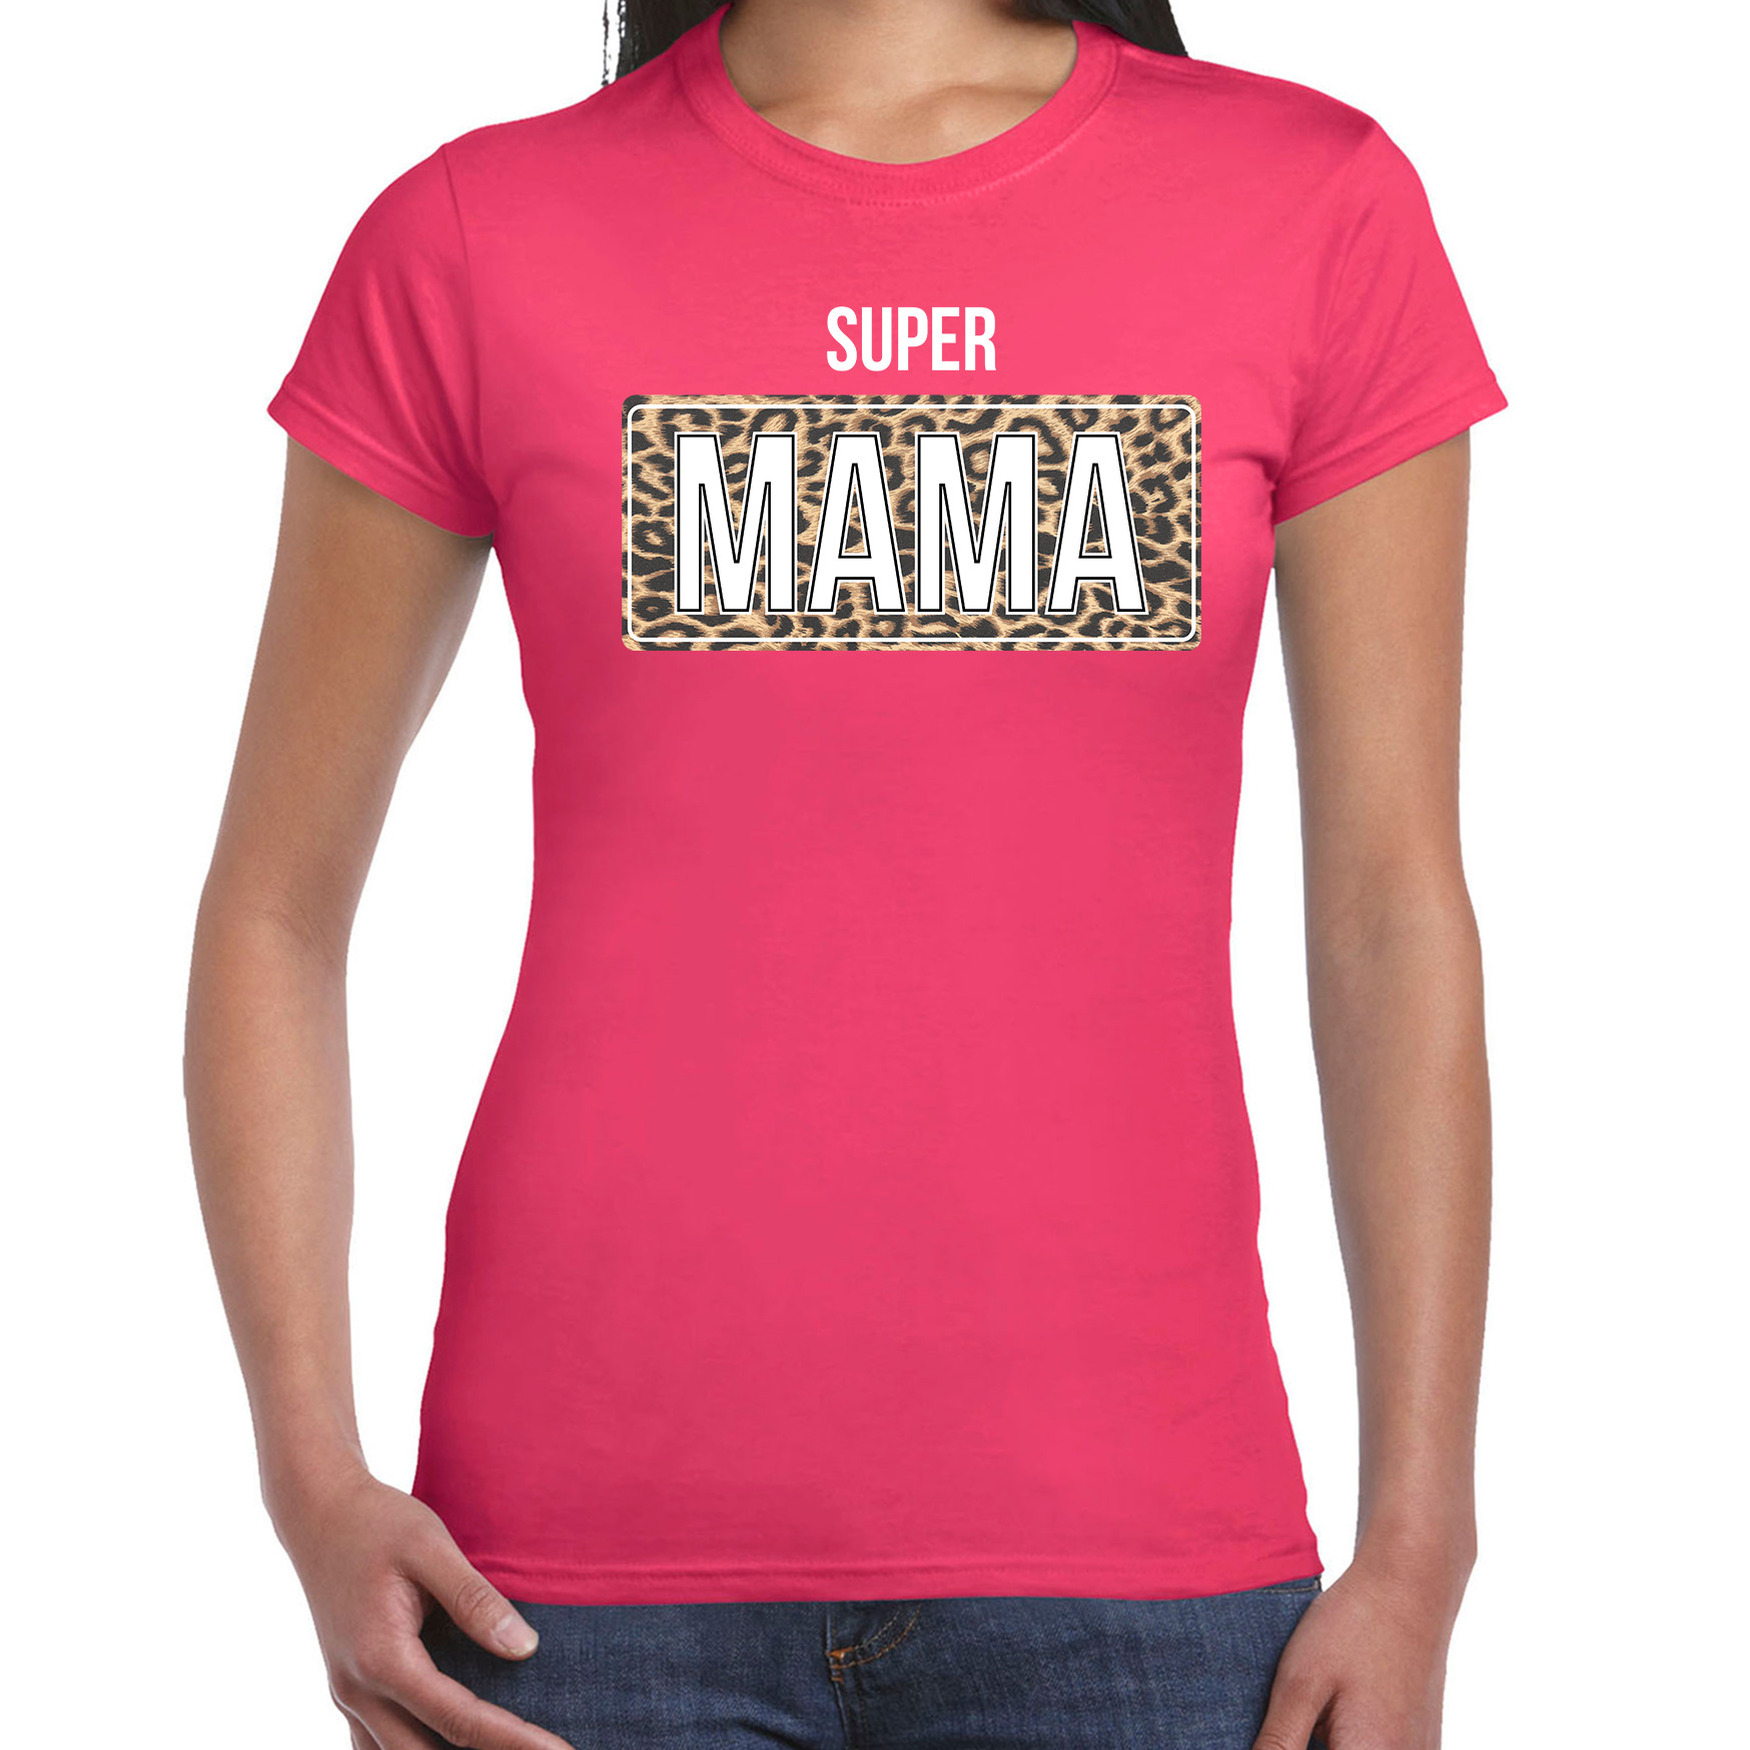 Super mama cadeau t-shirt roze voor dames